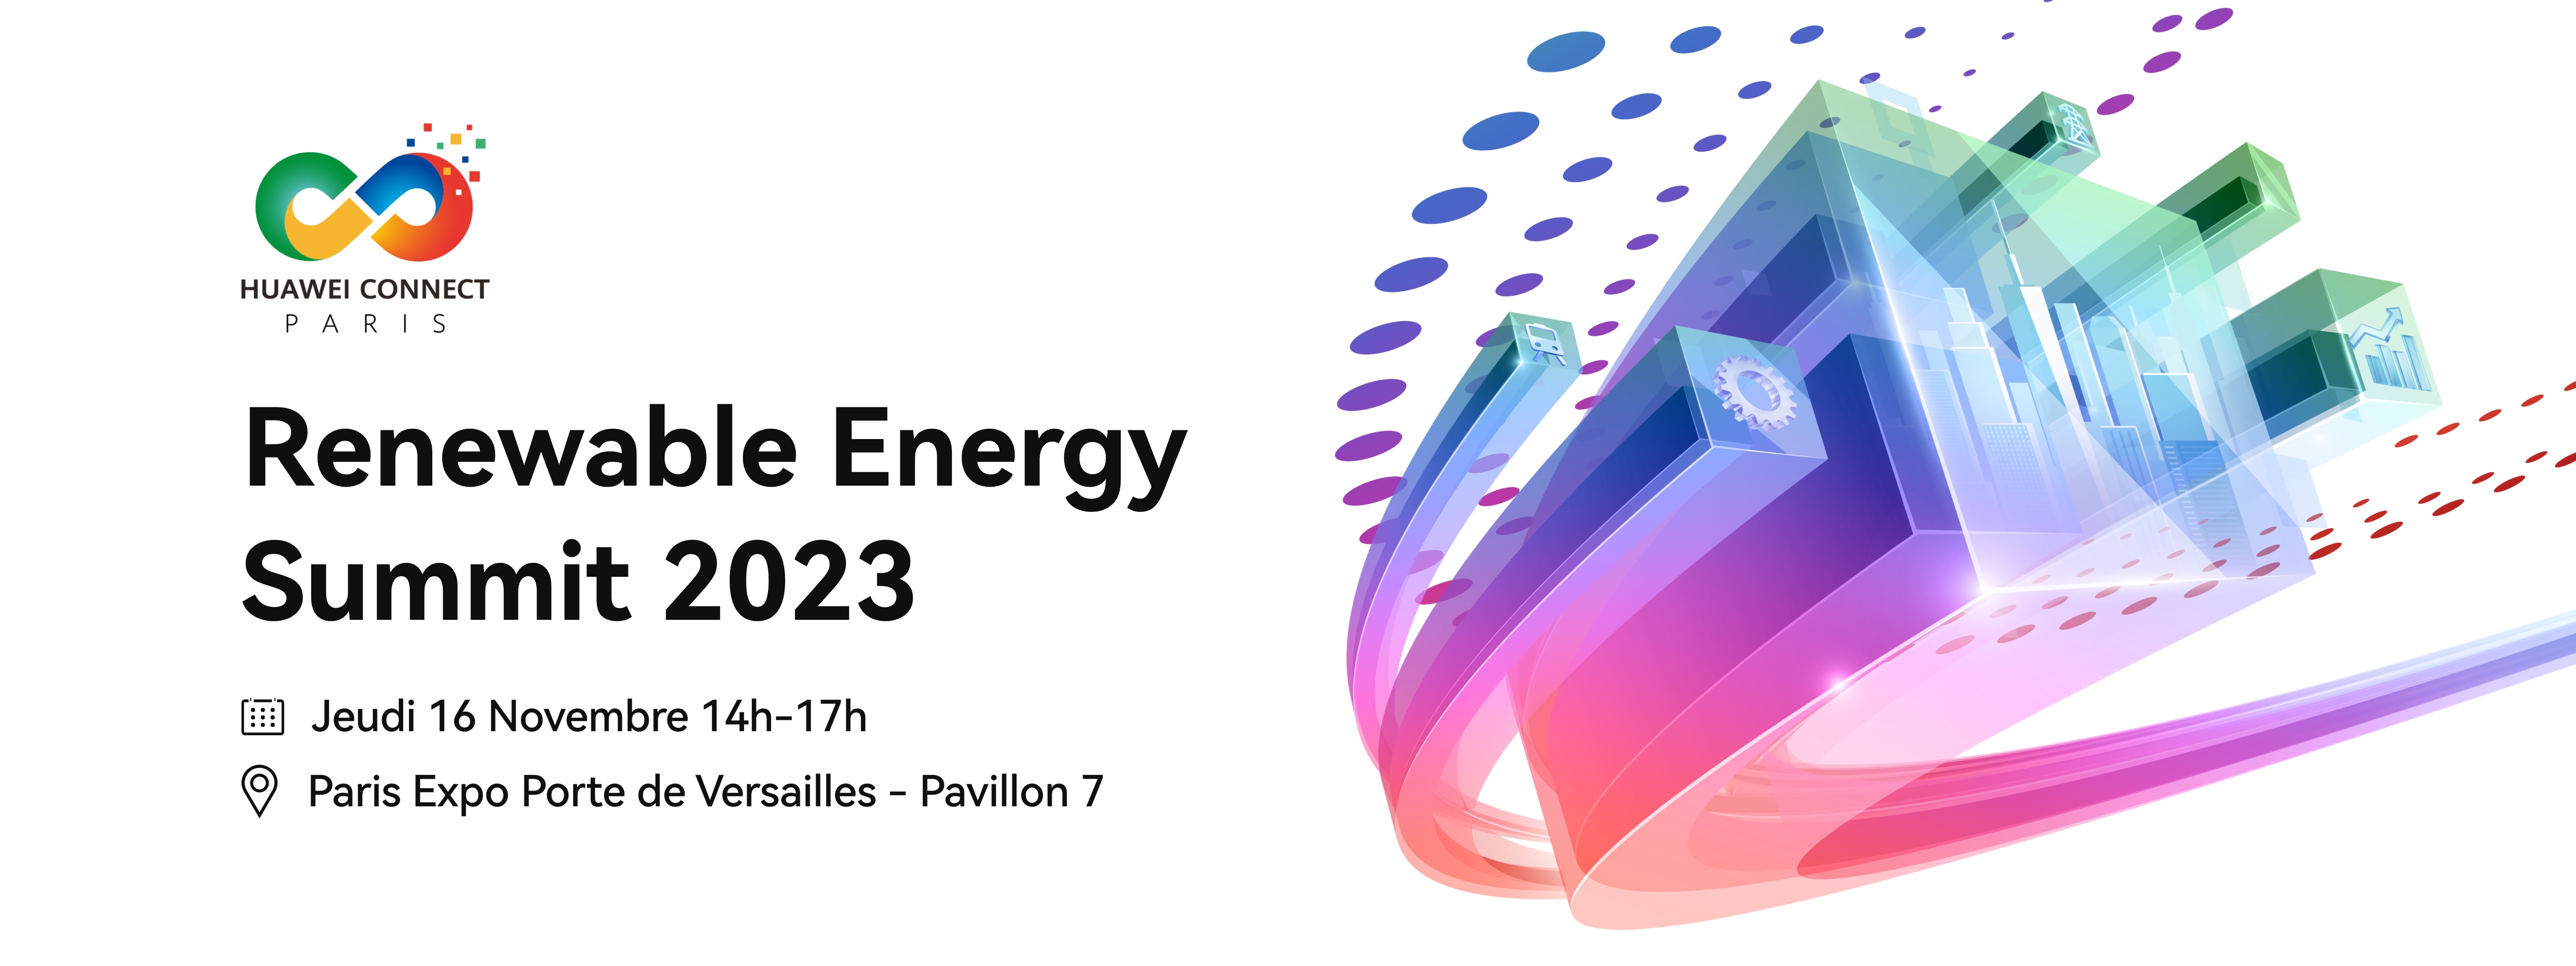 Renewable Energy Summit 2023 - FusionSolar France